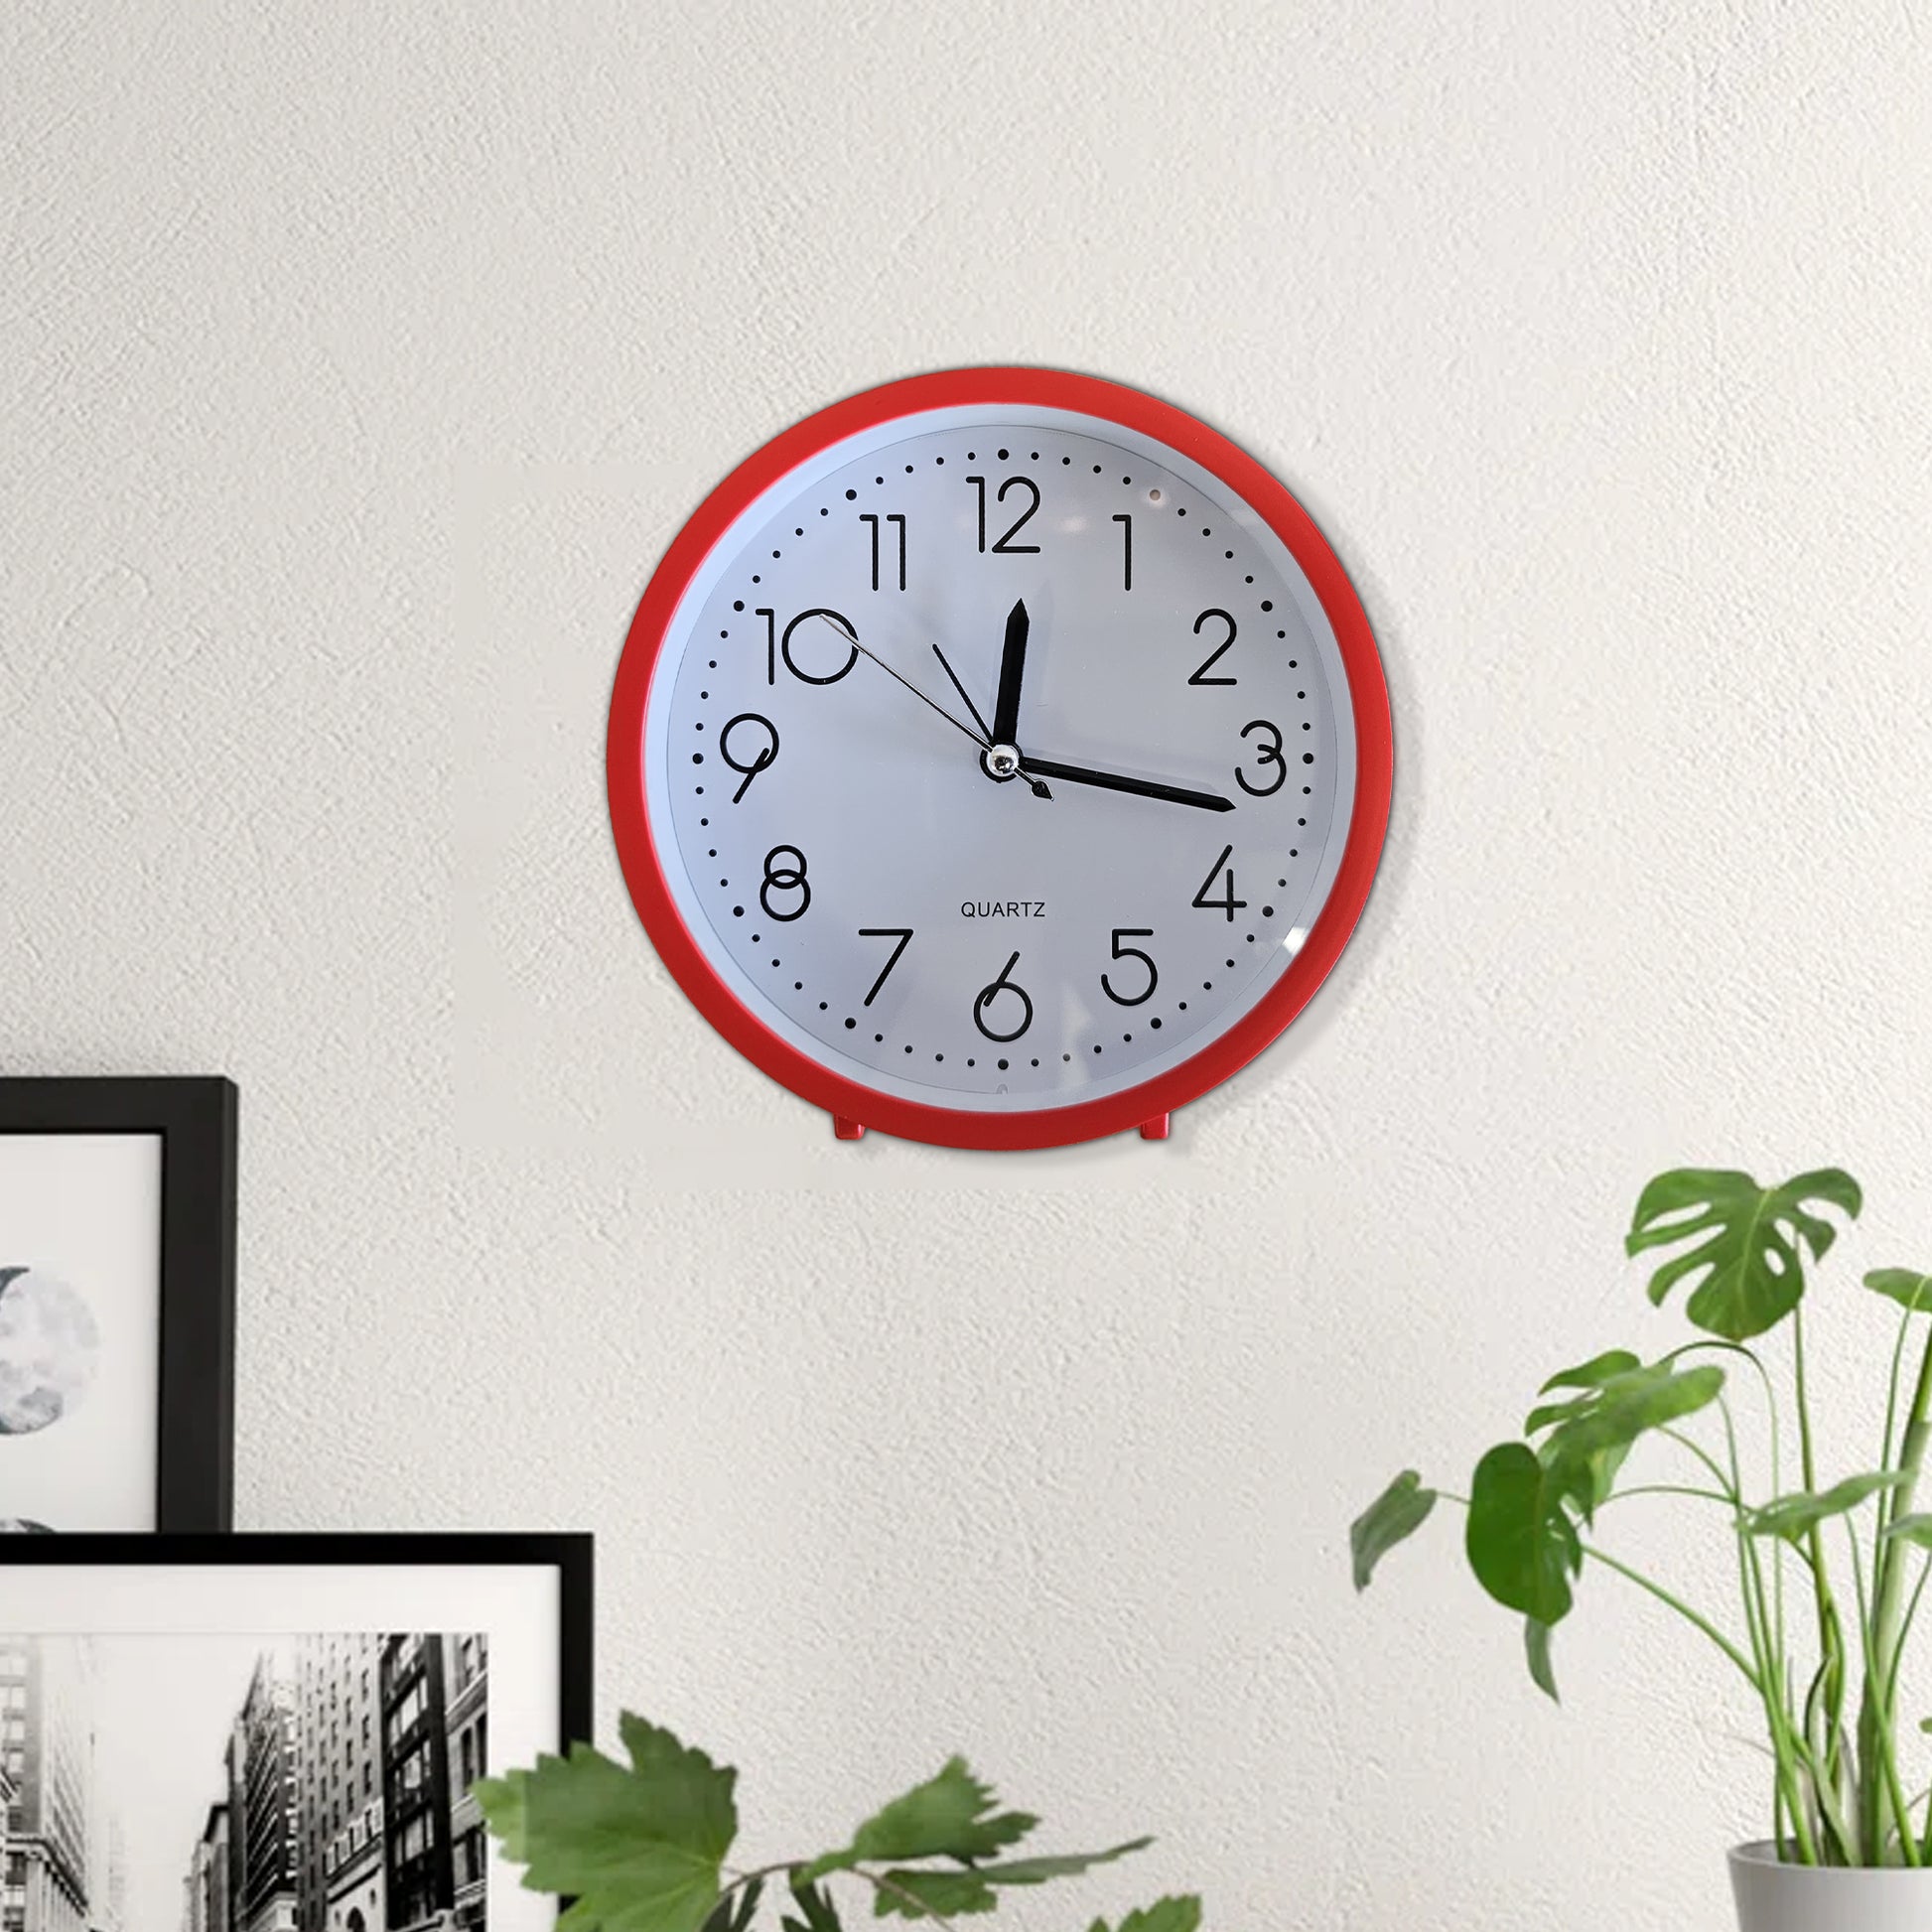 Wall Alarm Clock